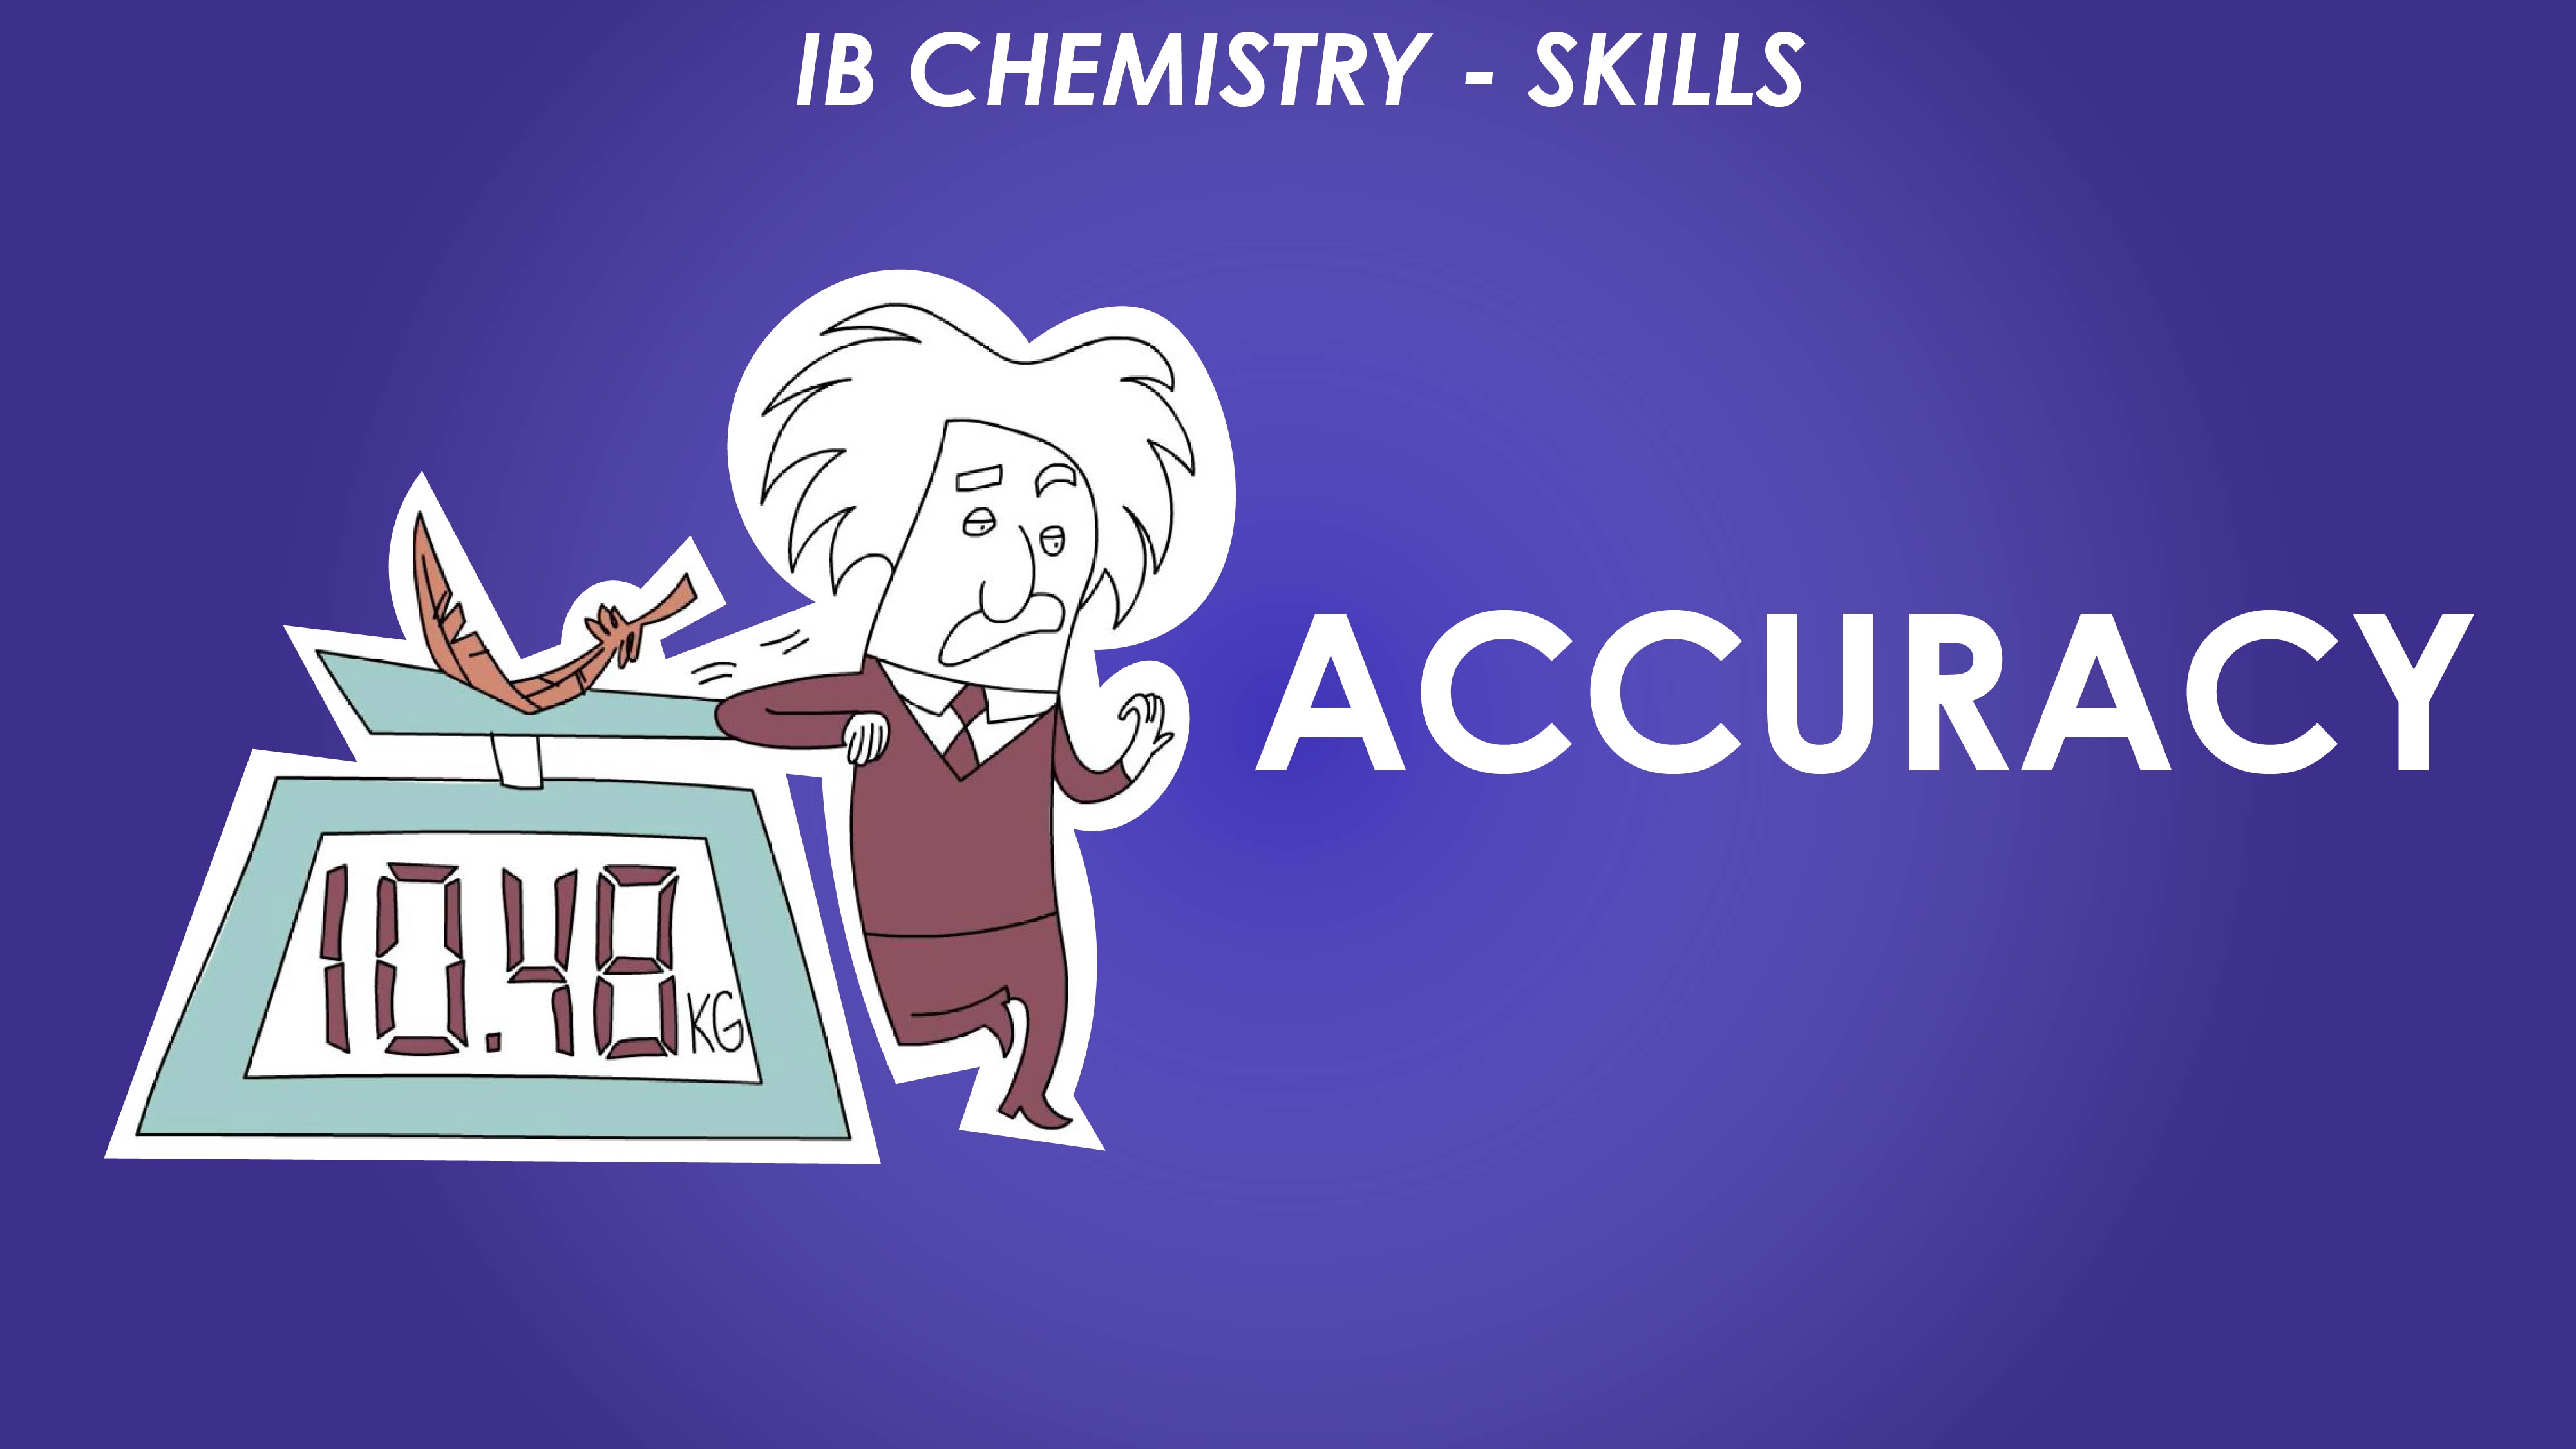 Accuracy - IB Chemistry Skills